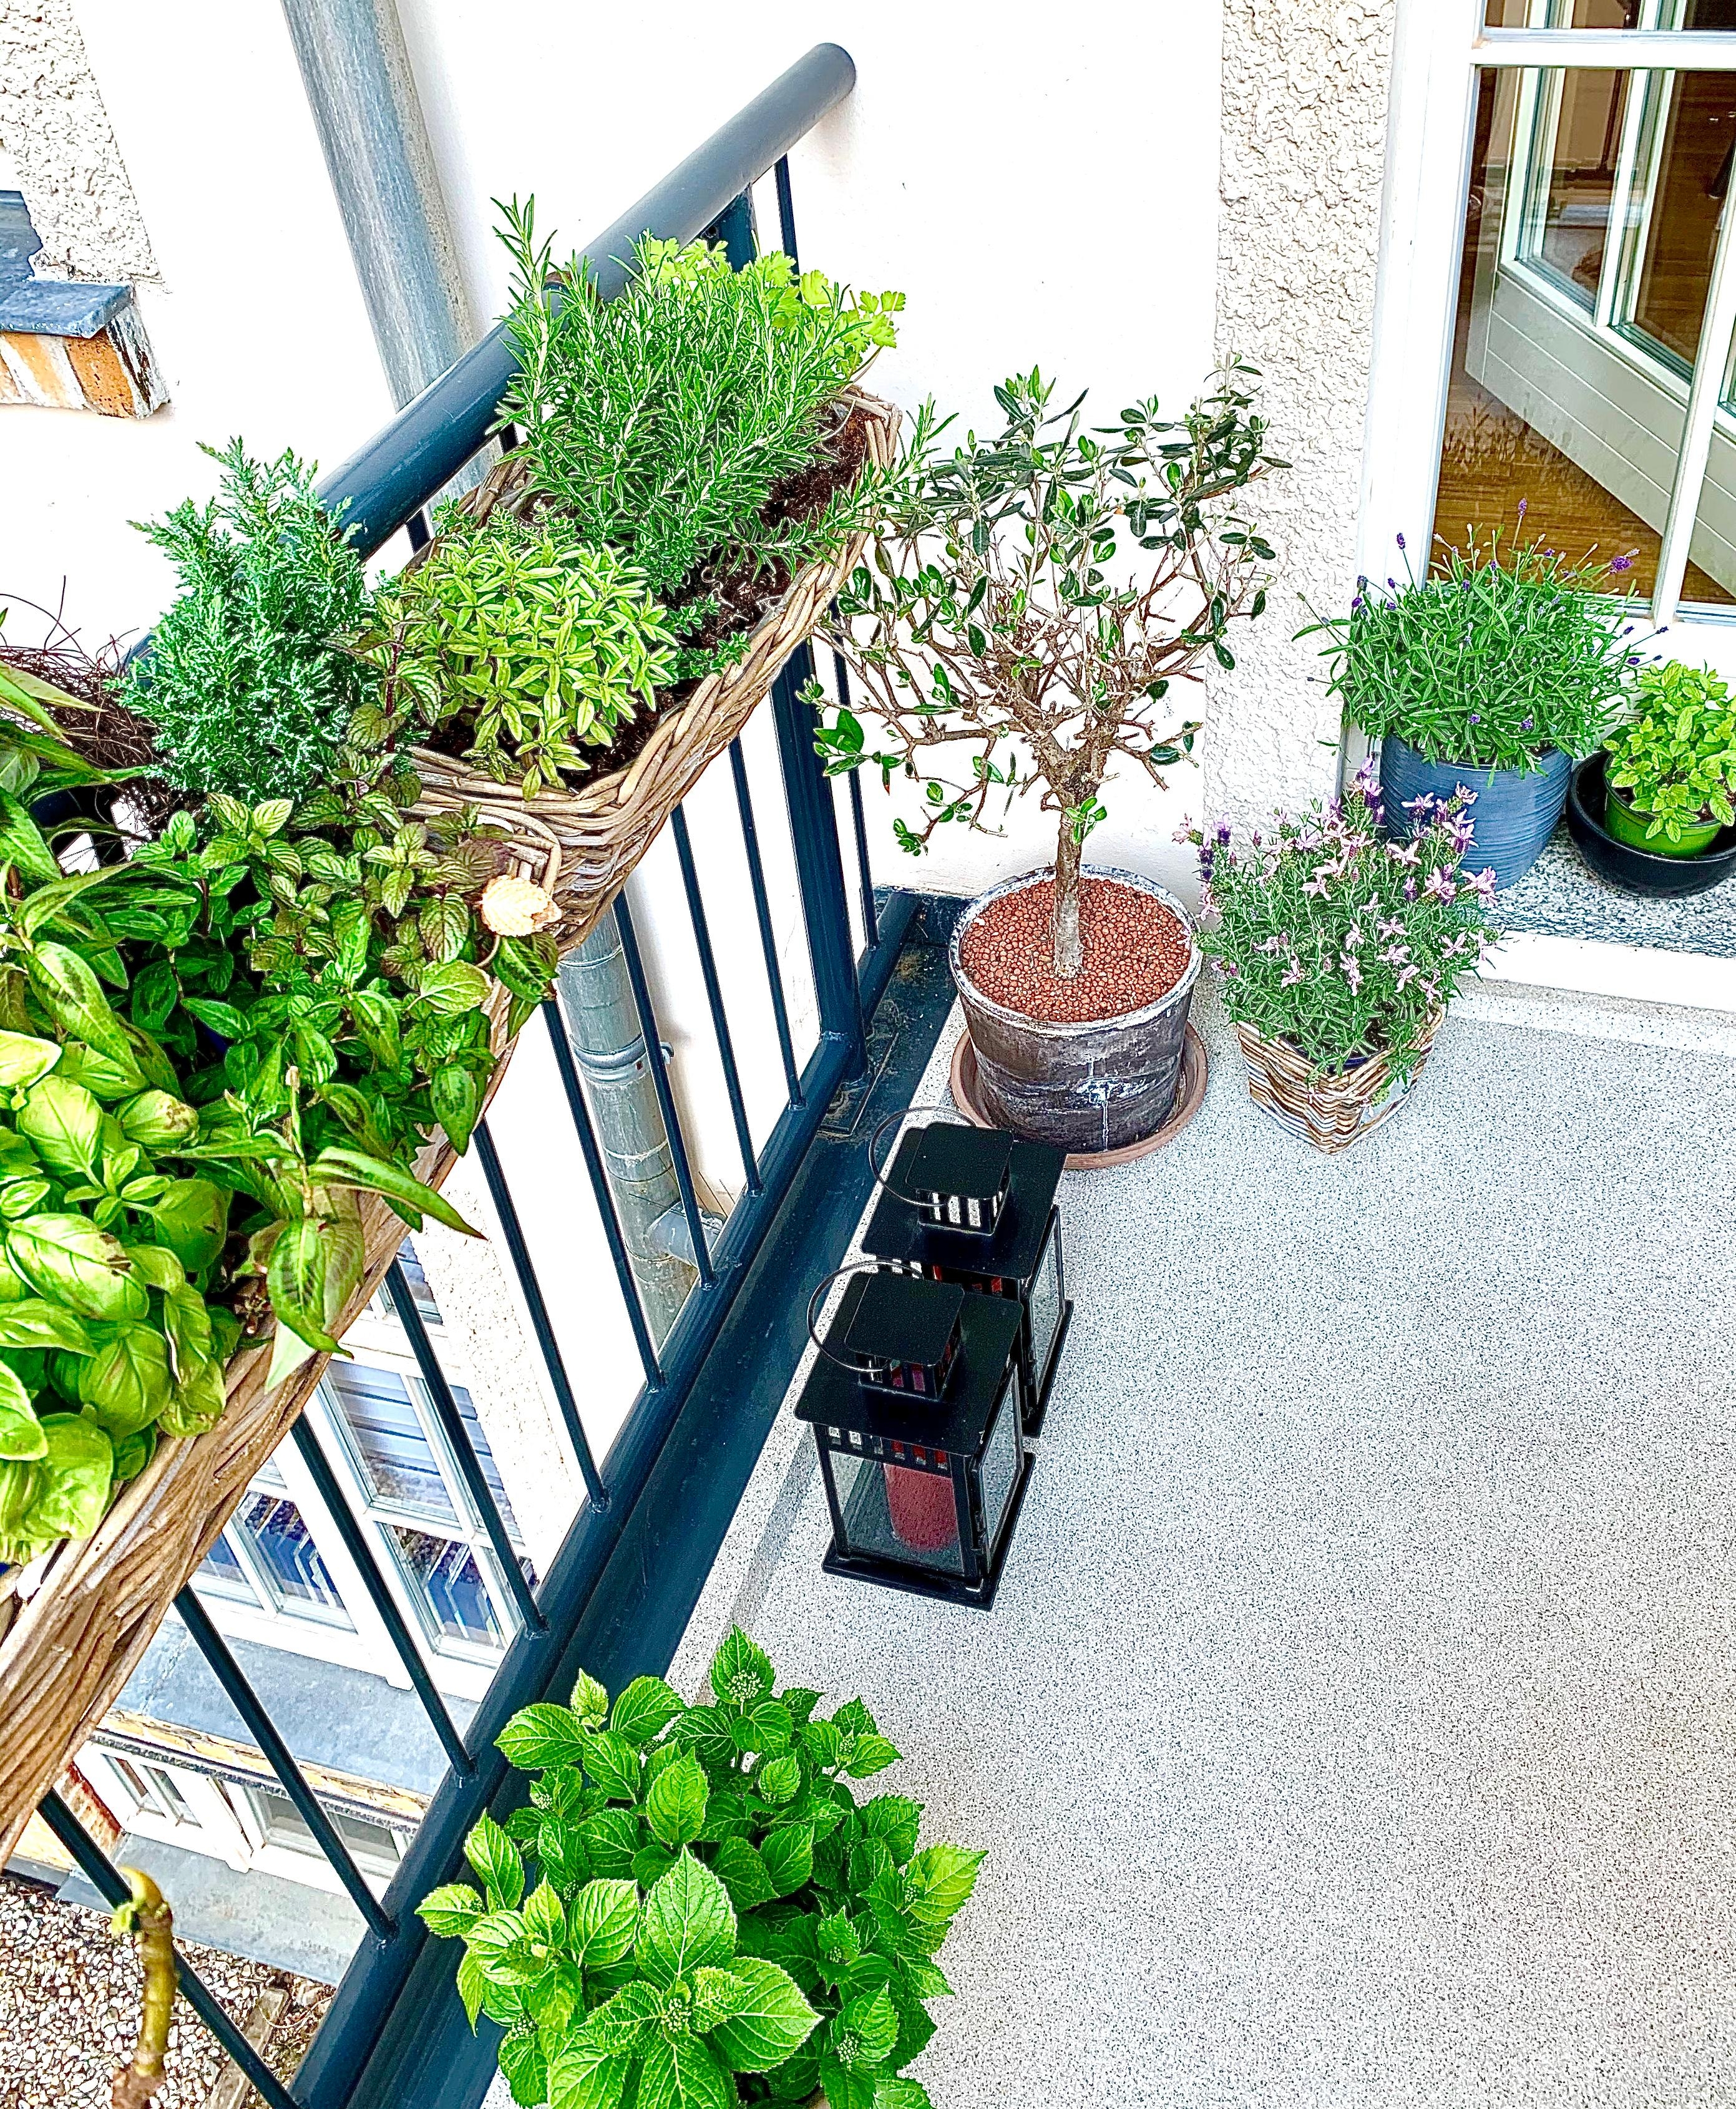 Geht jetzt gut ab auf dem #balkon
#outdoorliving #kuebelpflanzen